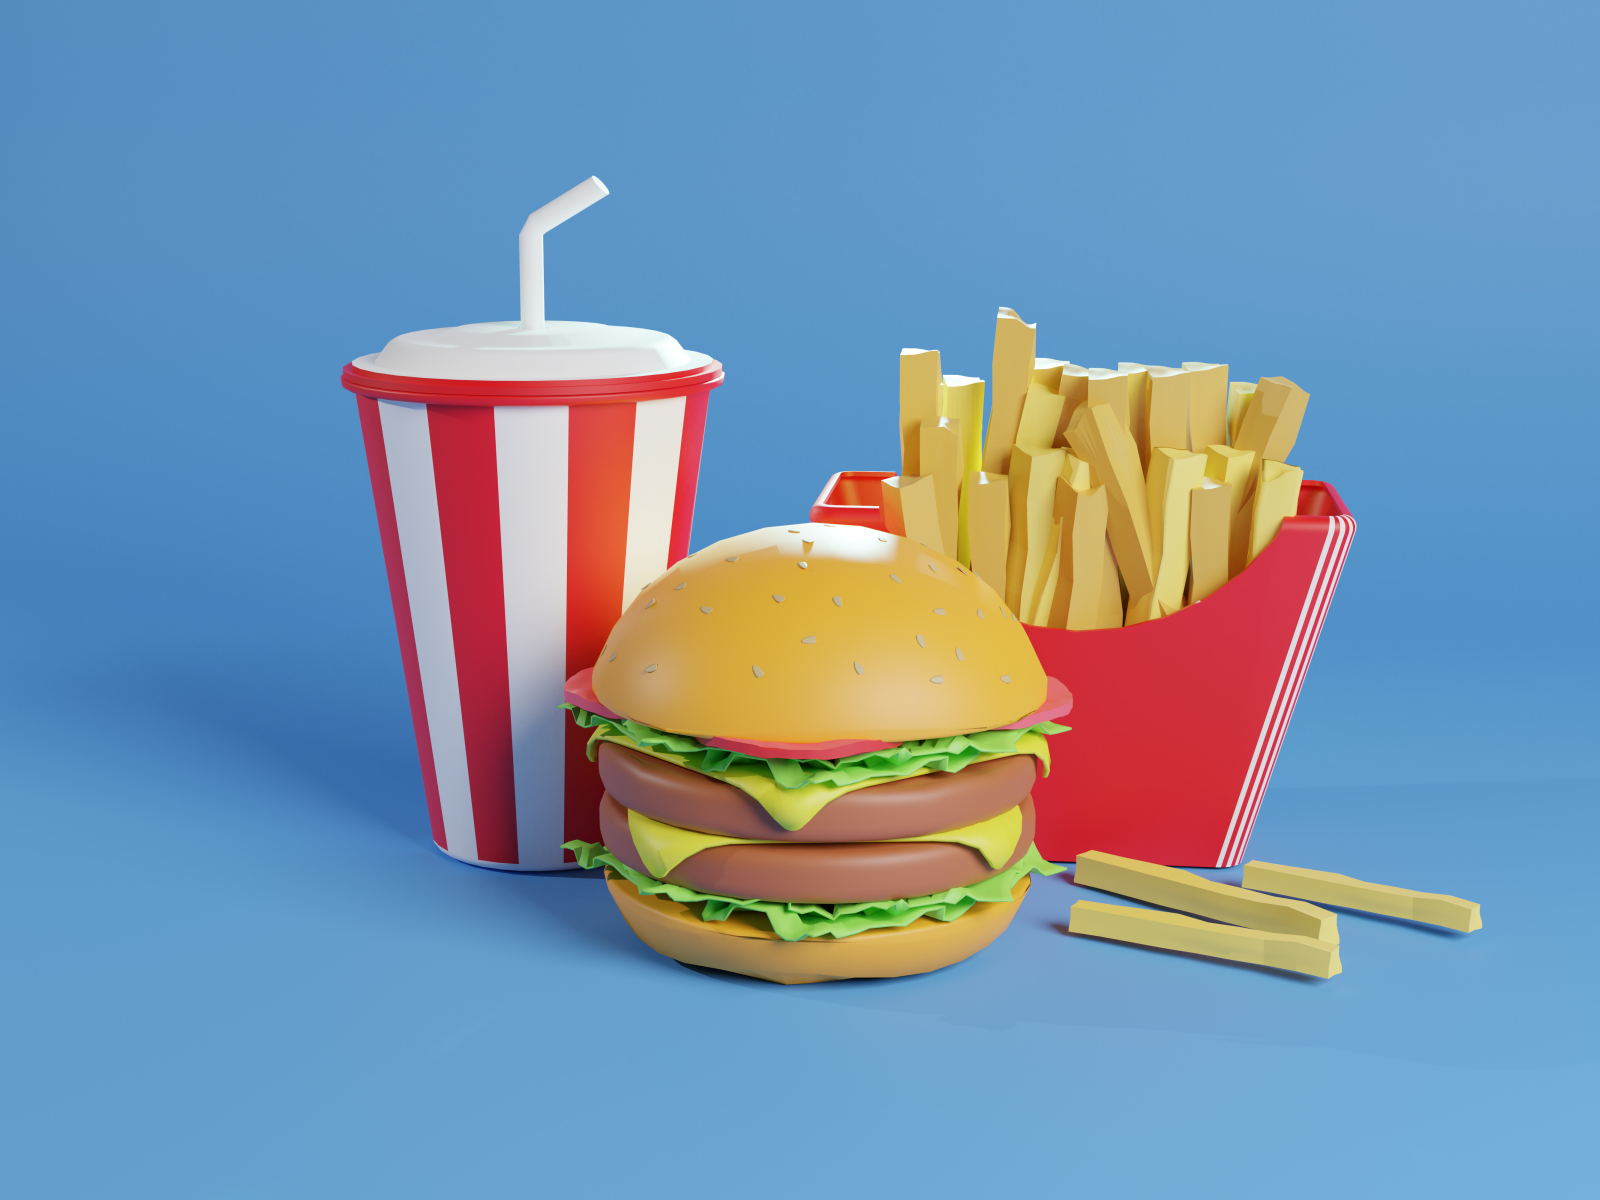 3D Burger Illustration by Restu Adyatma on Dribbble